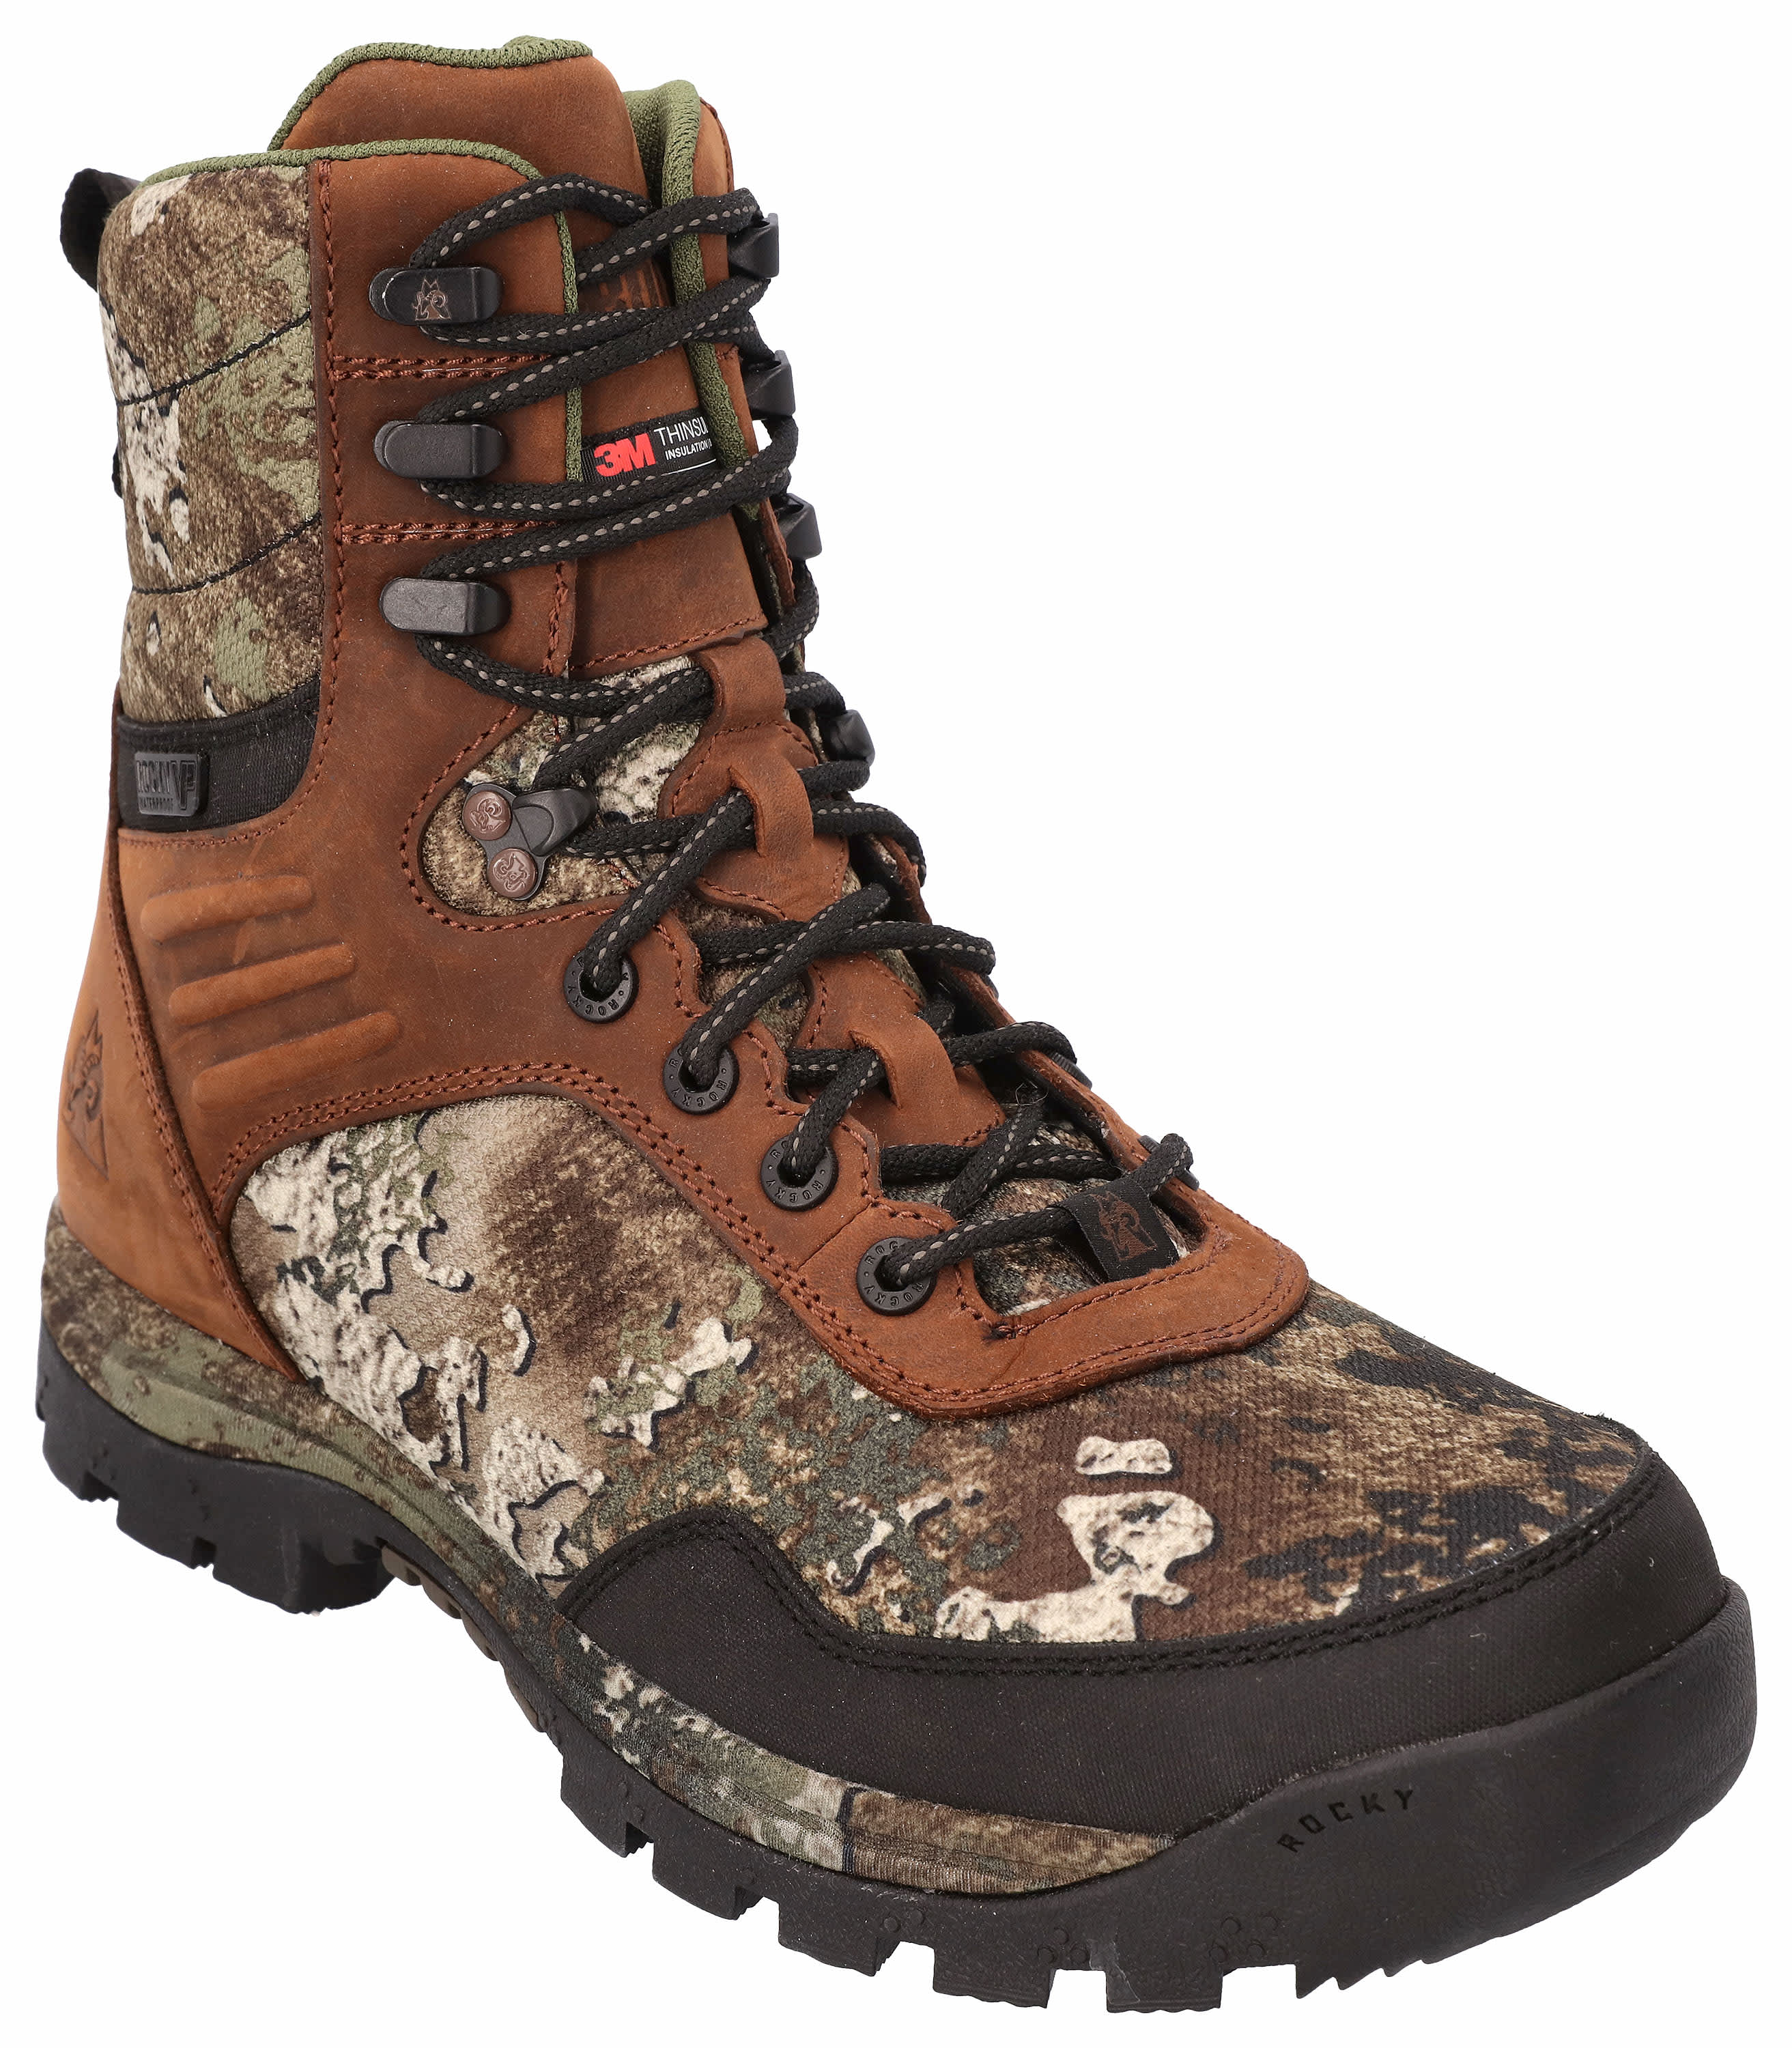 ROCKY® Lynx TrueTimber Insulated Waterproof Hunting Boots for Men